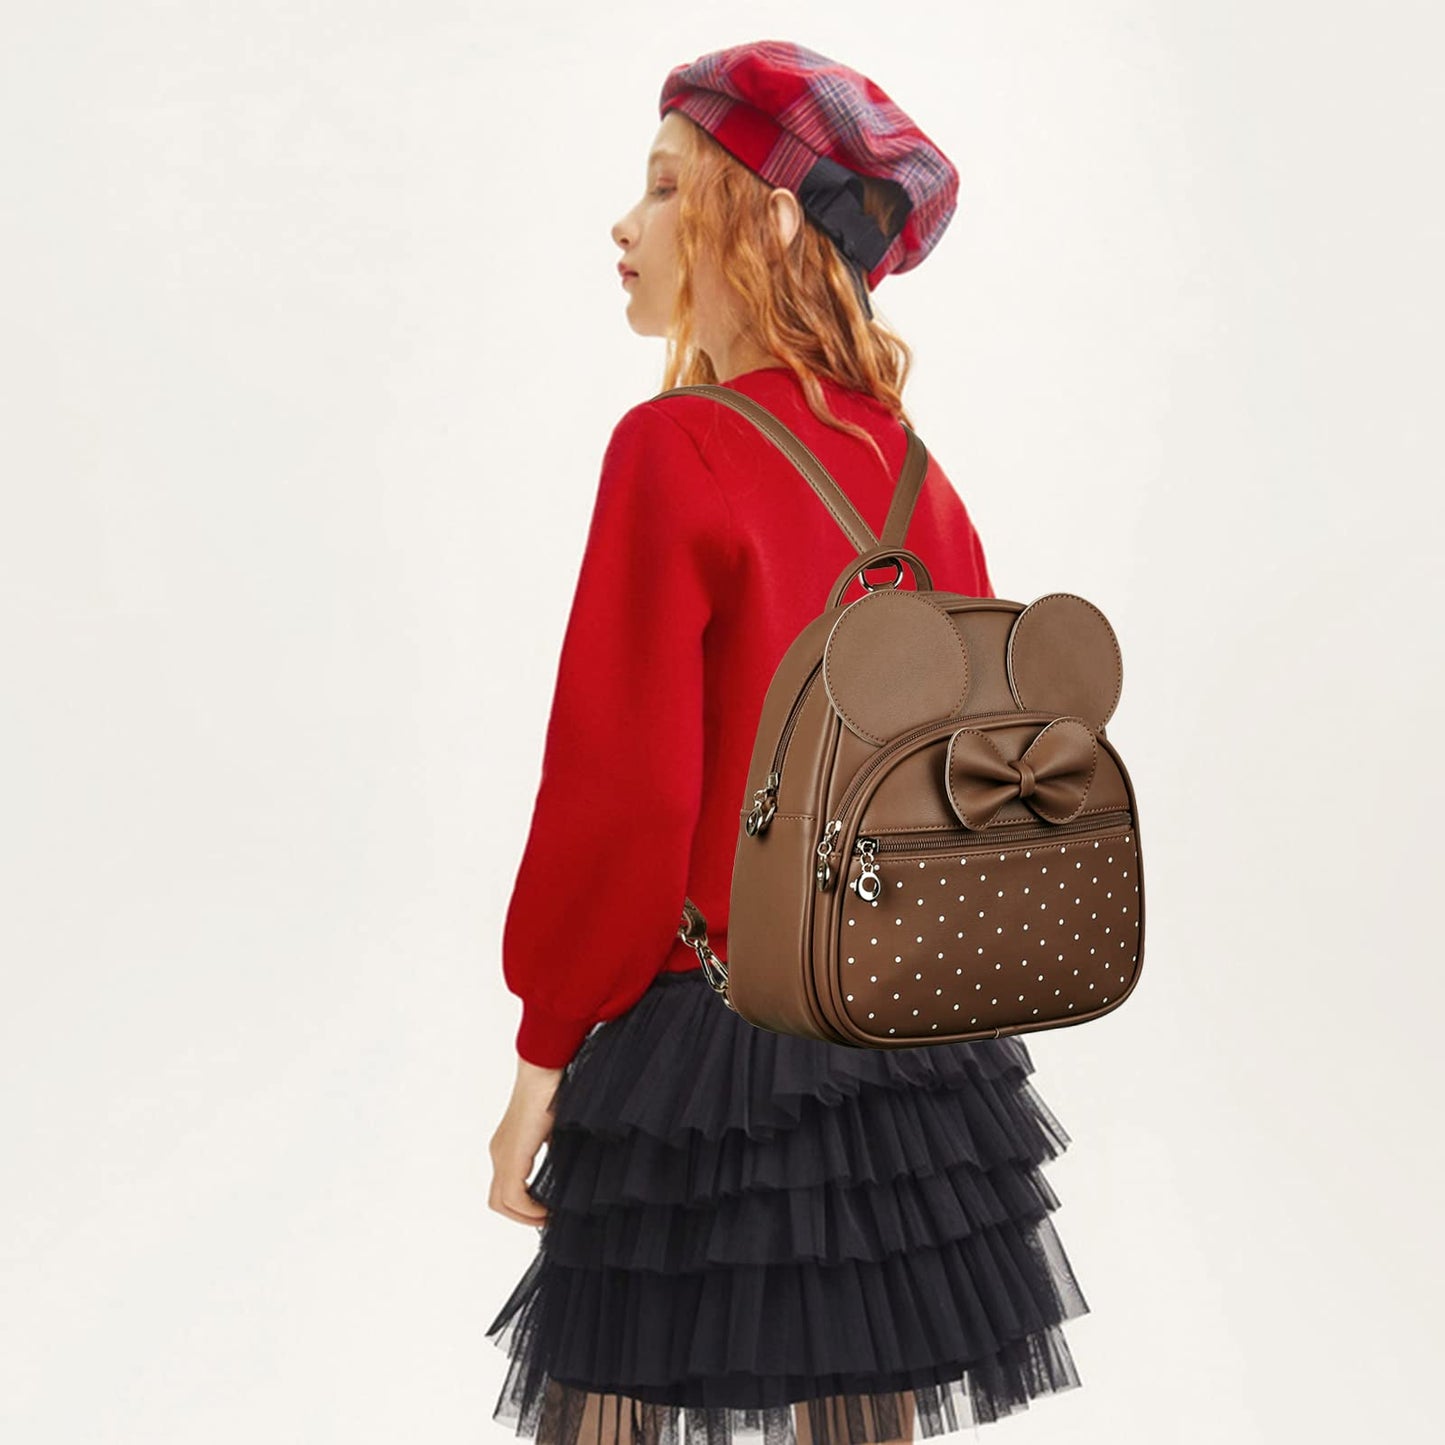 Girls Mini Backpack Bowknot Polka Dot Cute Daypacks Convertible Shoulder Bag Purse for Women (Brown)